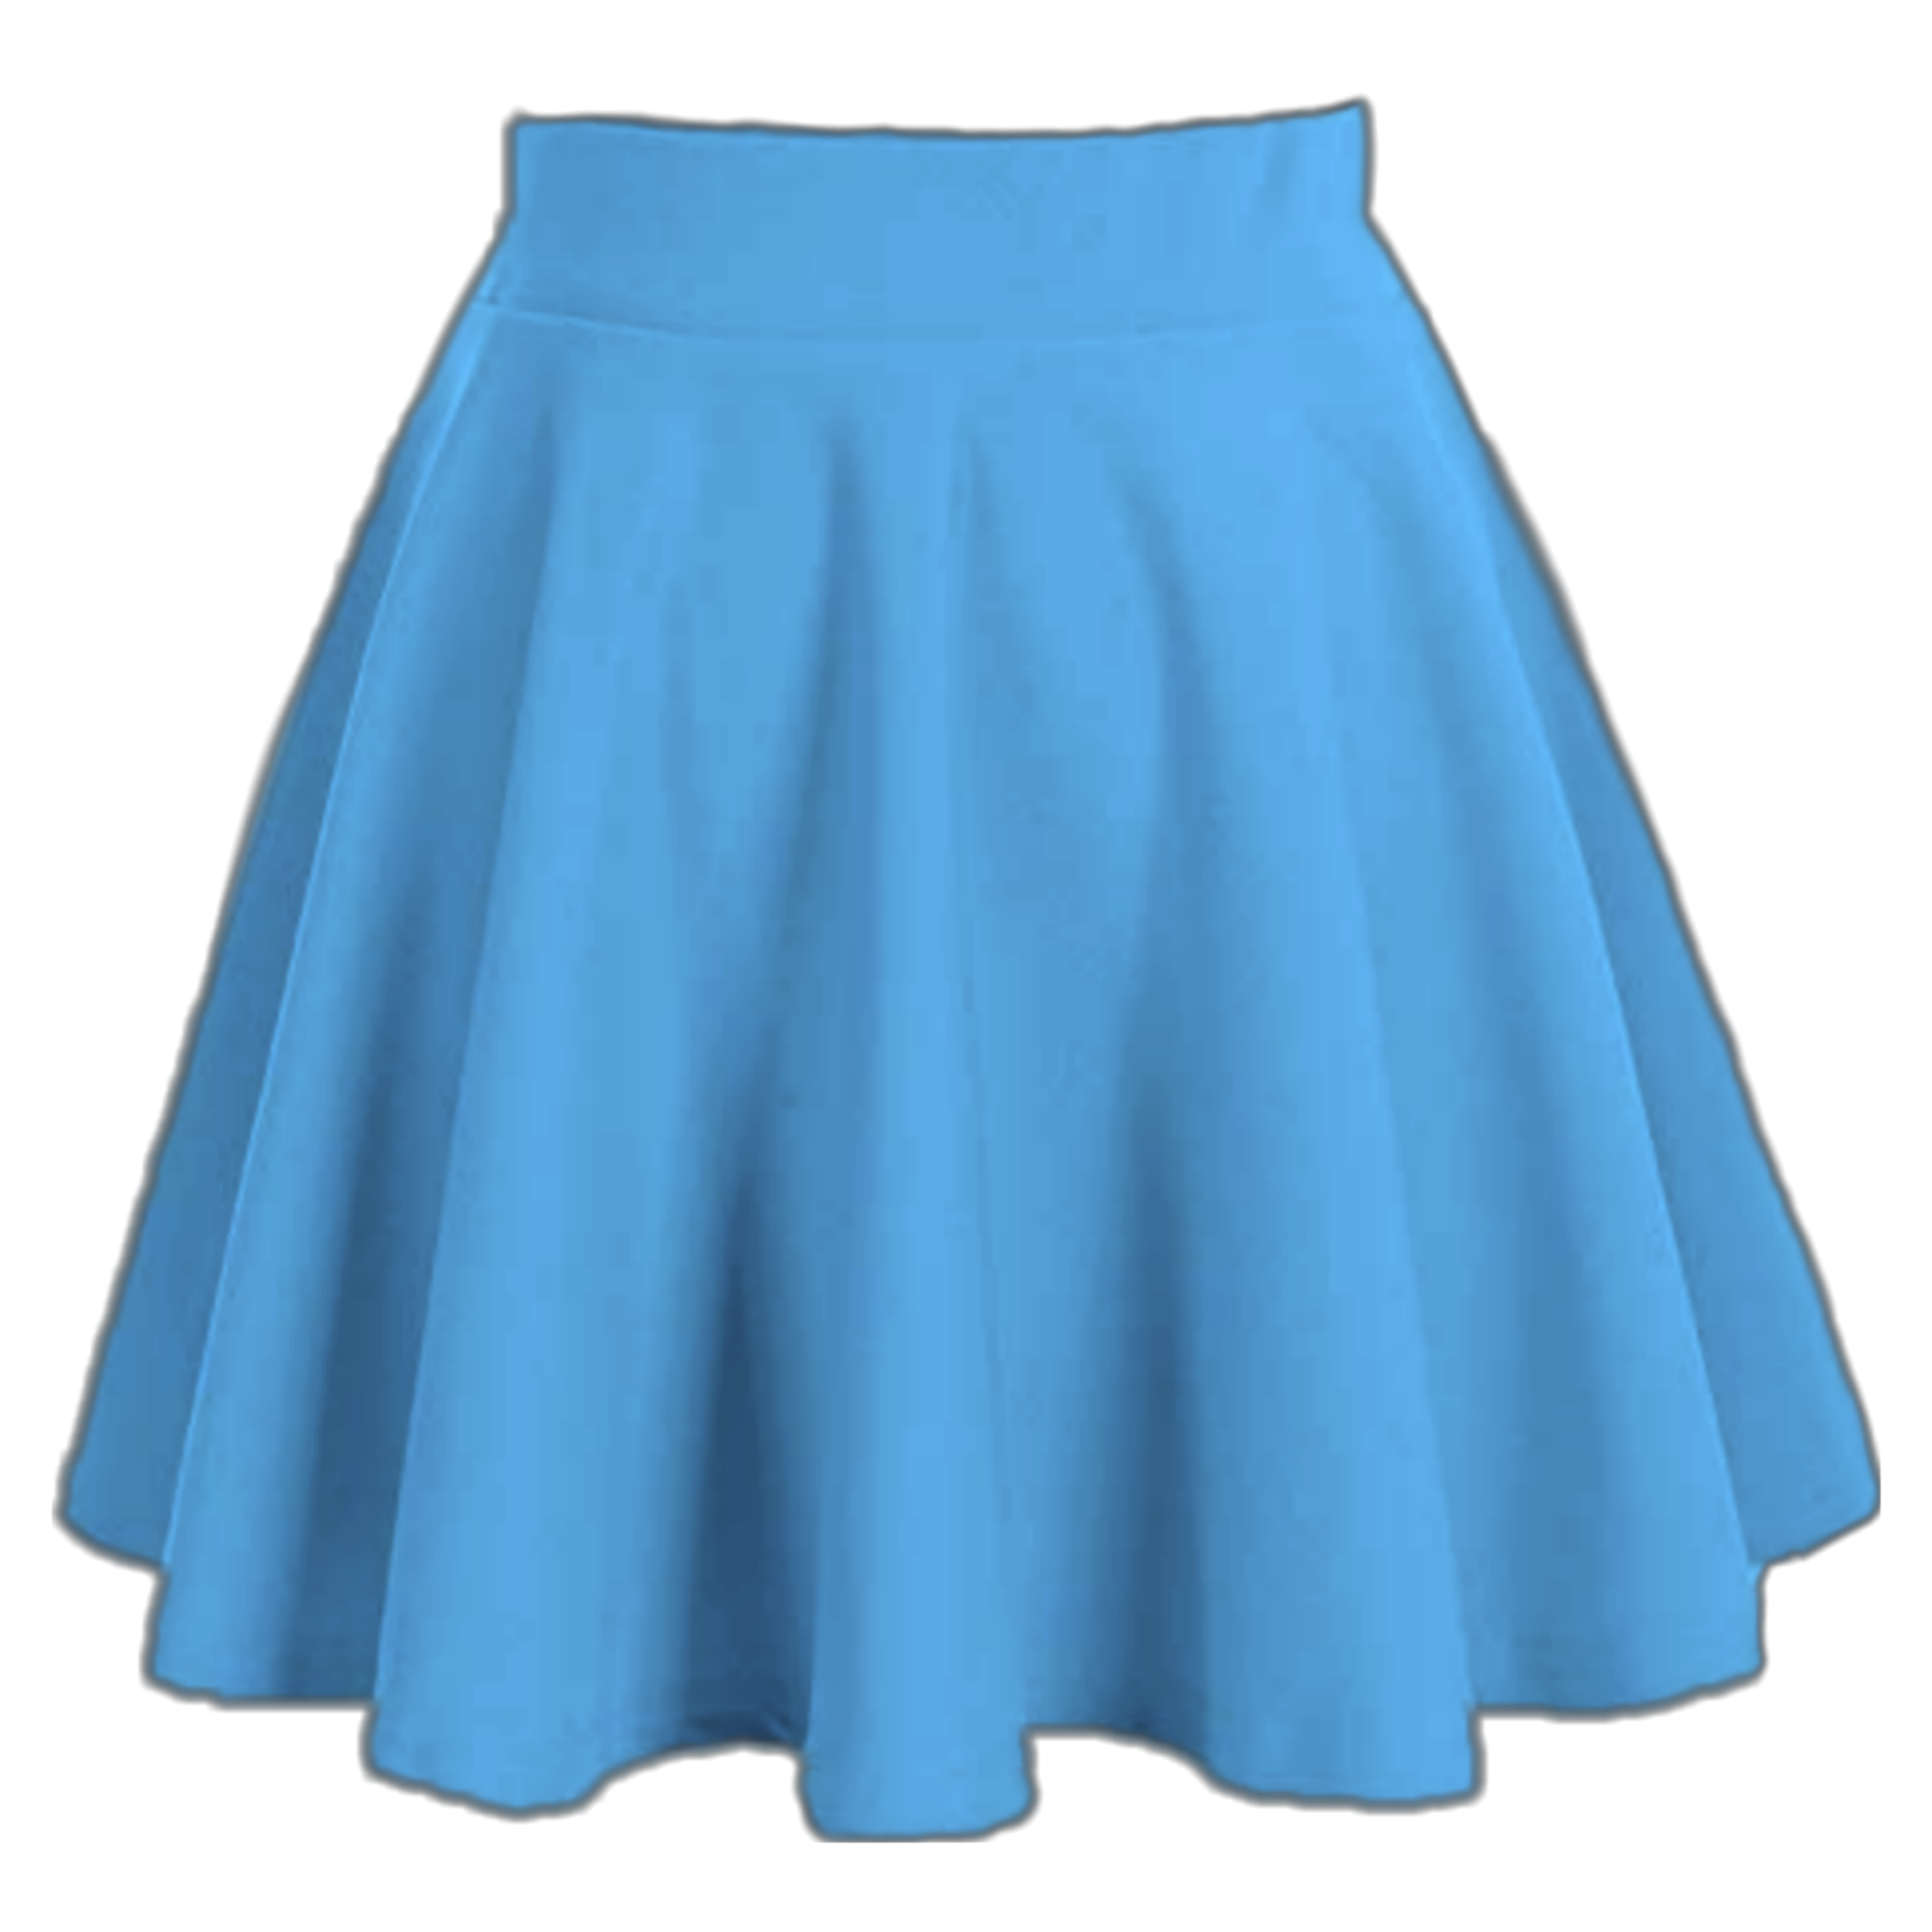 Skirt Blue No Background